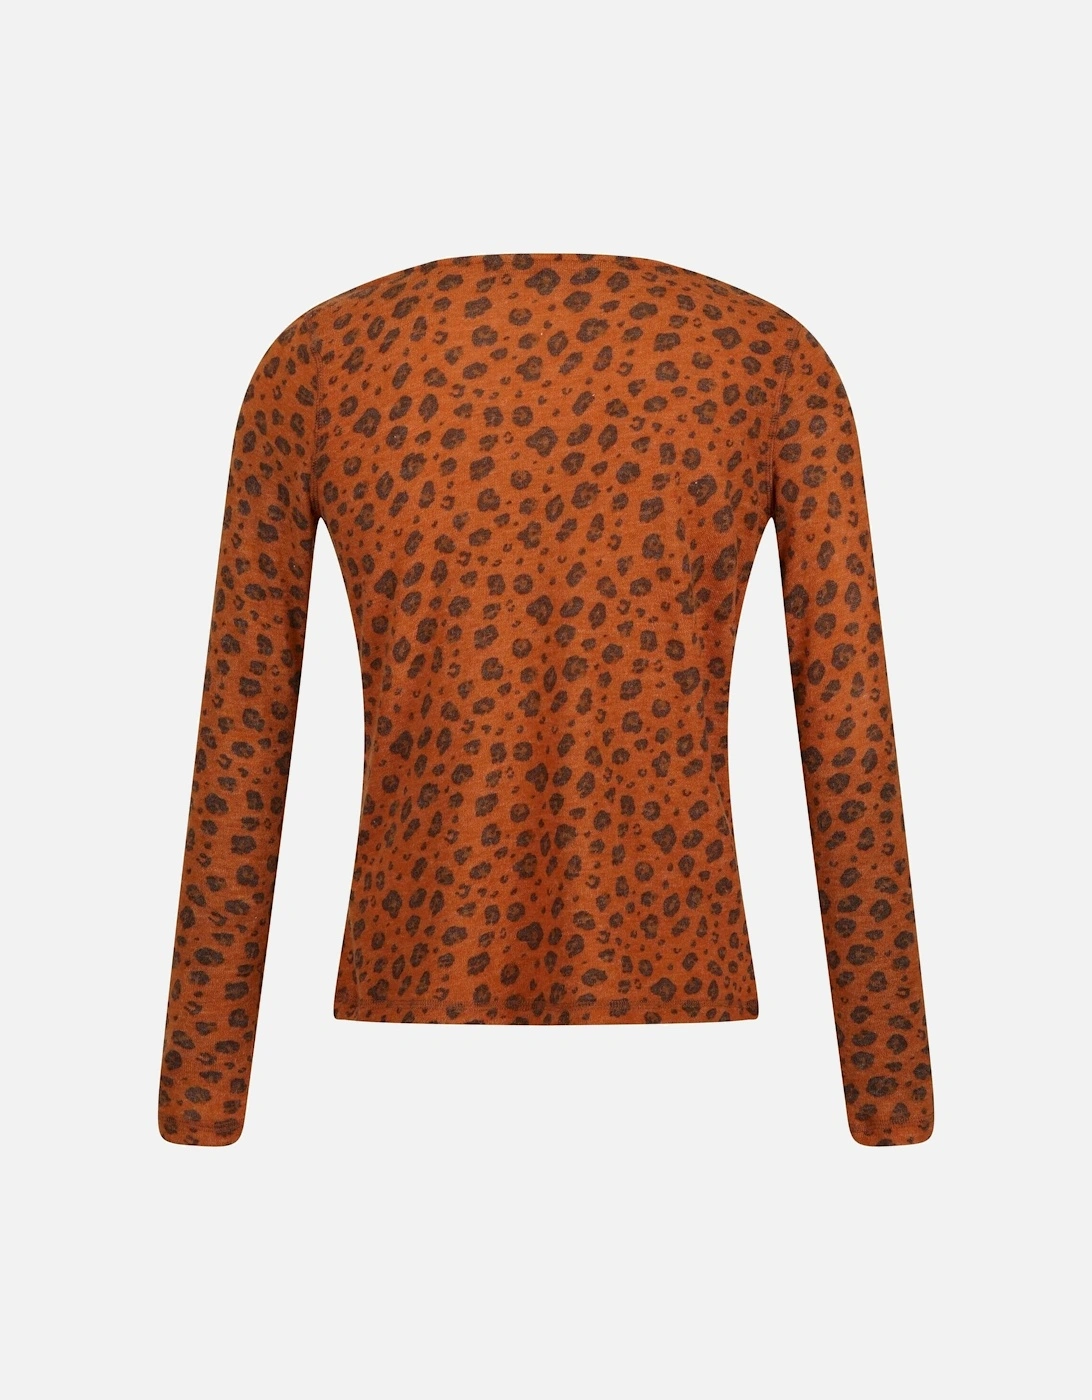 Womens/Ladies Frayda Leopard Print Cowl Neck Top